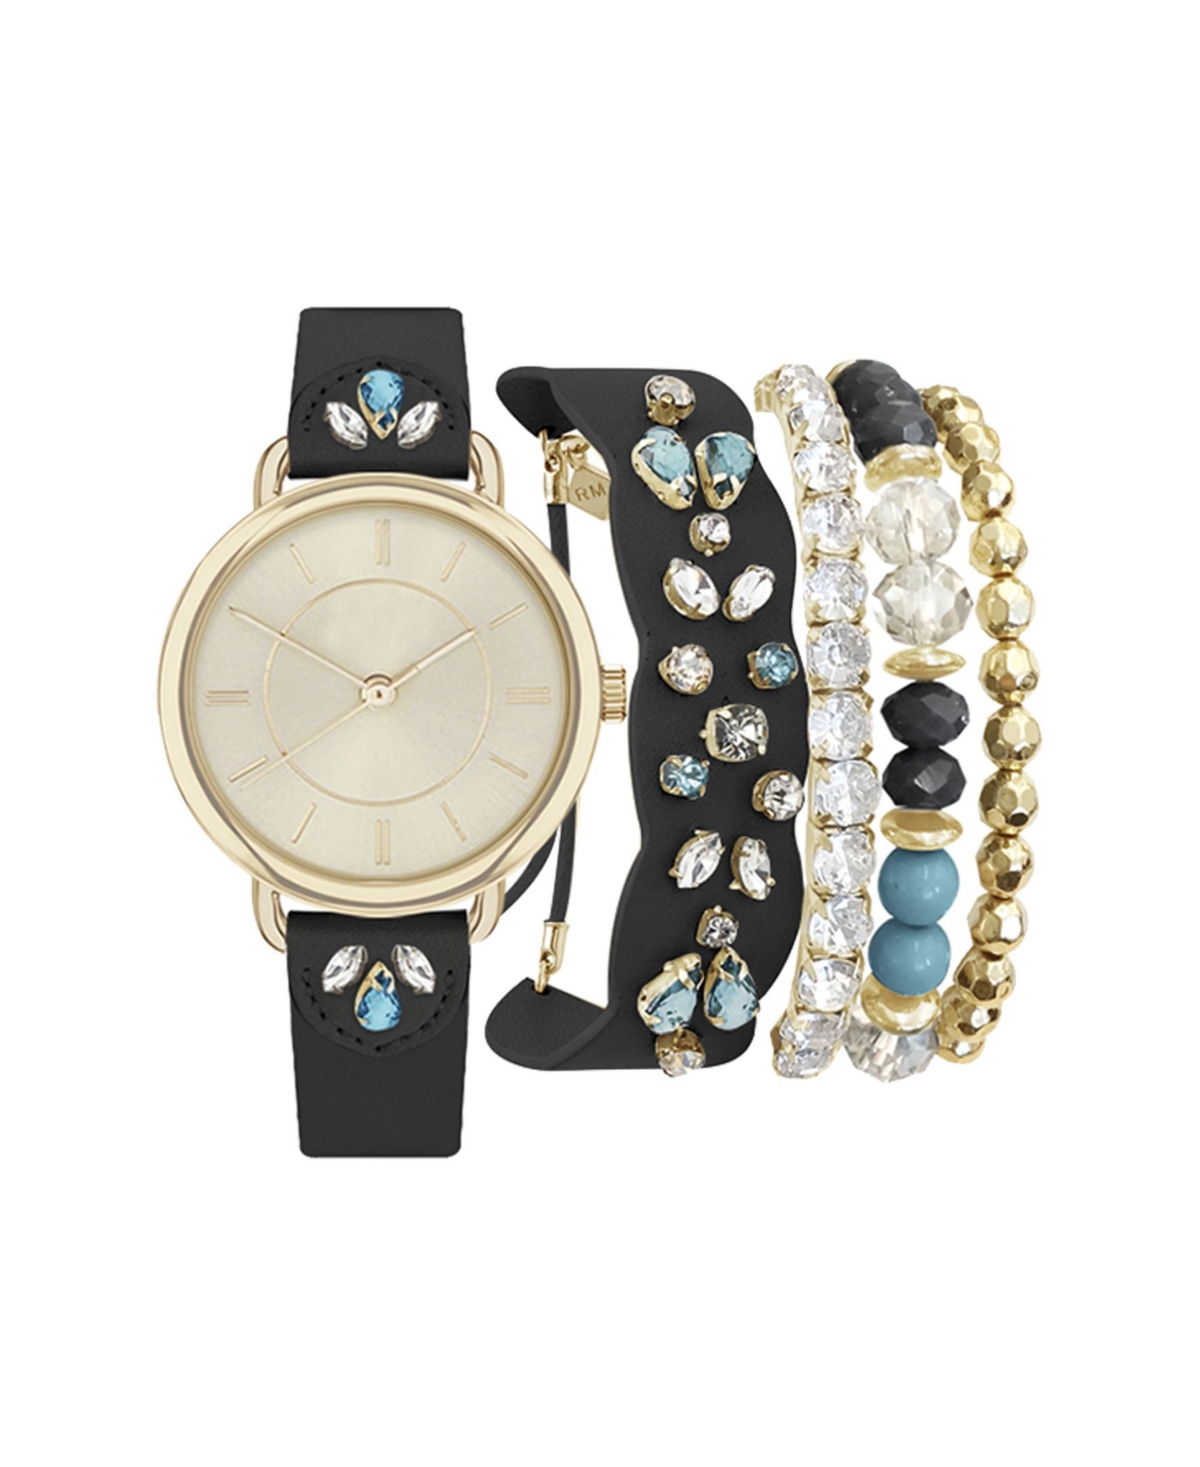 Women's Analog Black Jeweled Strap Watch 34mm with Matching Bracelets Set - Black